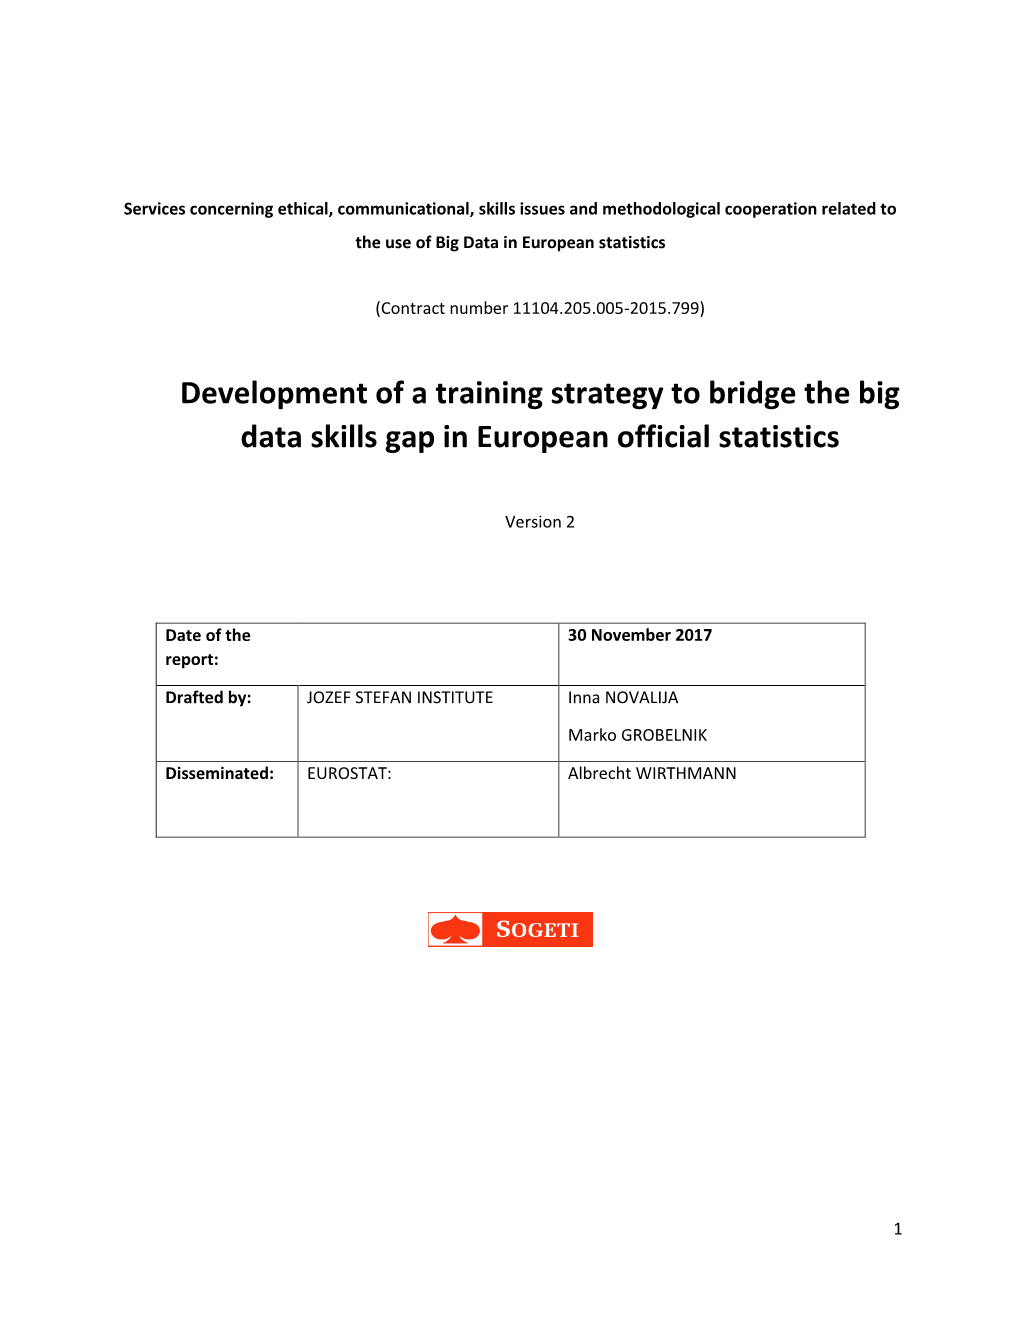 Development of a Training Strategy to Bridge the Big Data Skills Gap in European Official Statistics